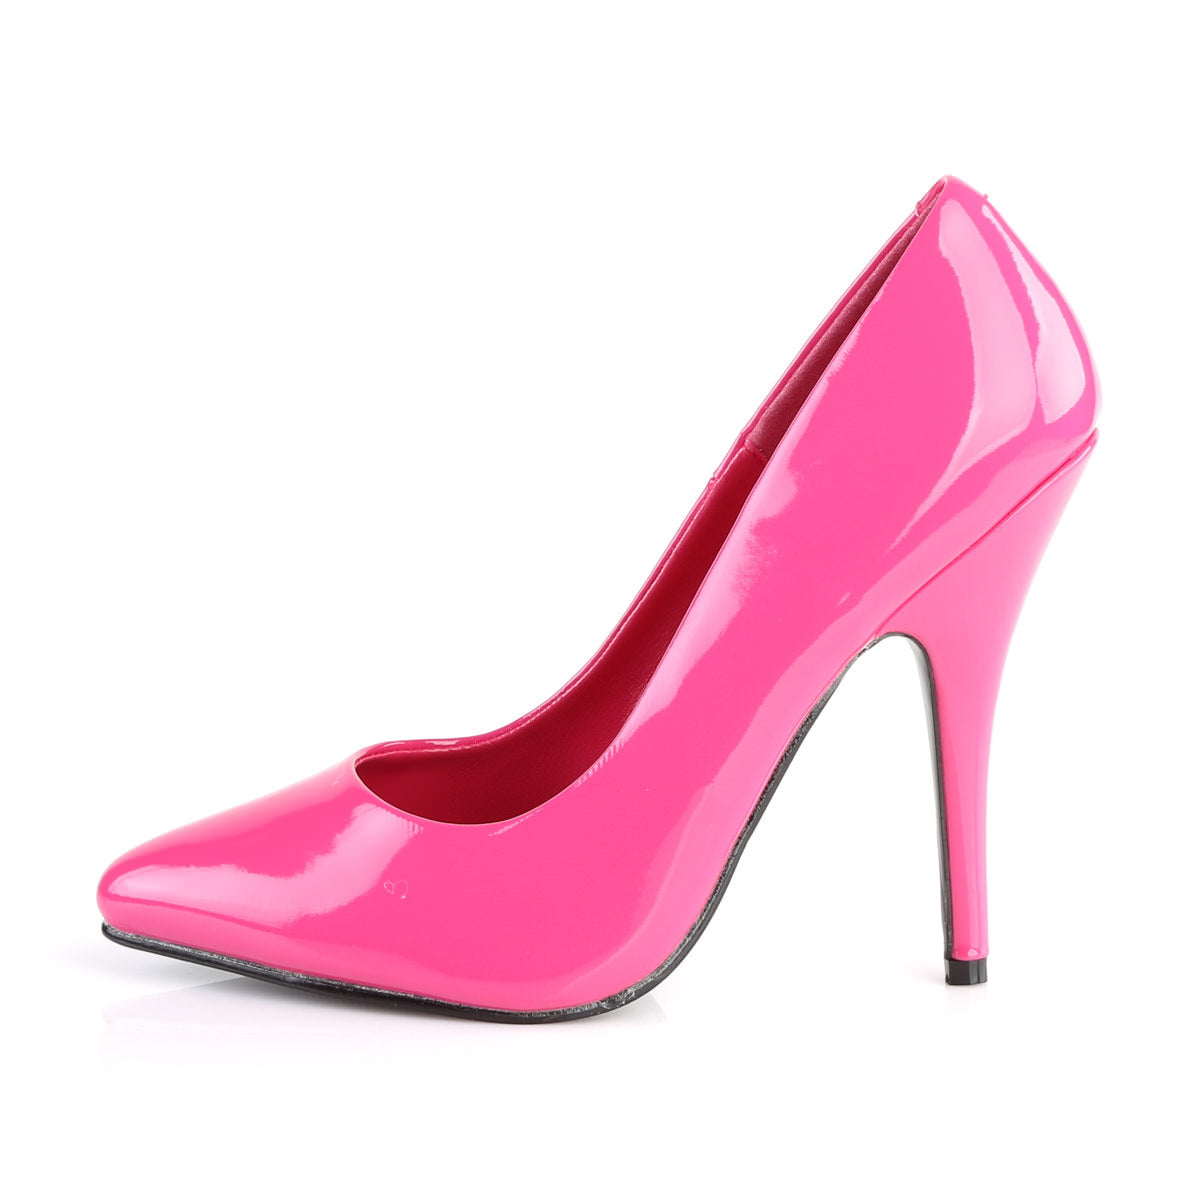 Pleaser SEDUCE-420 5 Inch Heel Hot Pink Patent Plus Size Classic Pumps ...